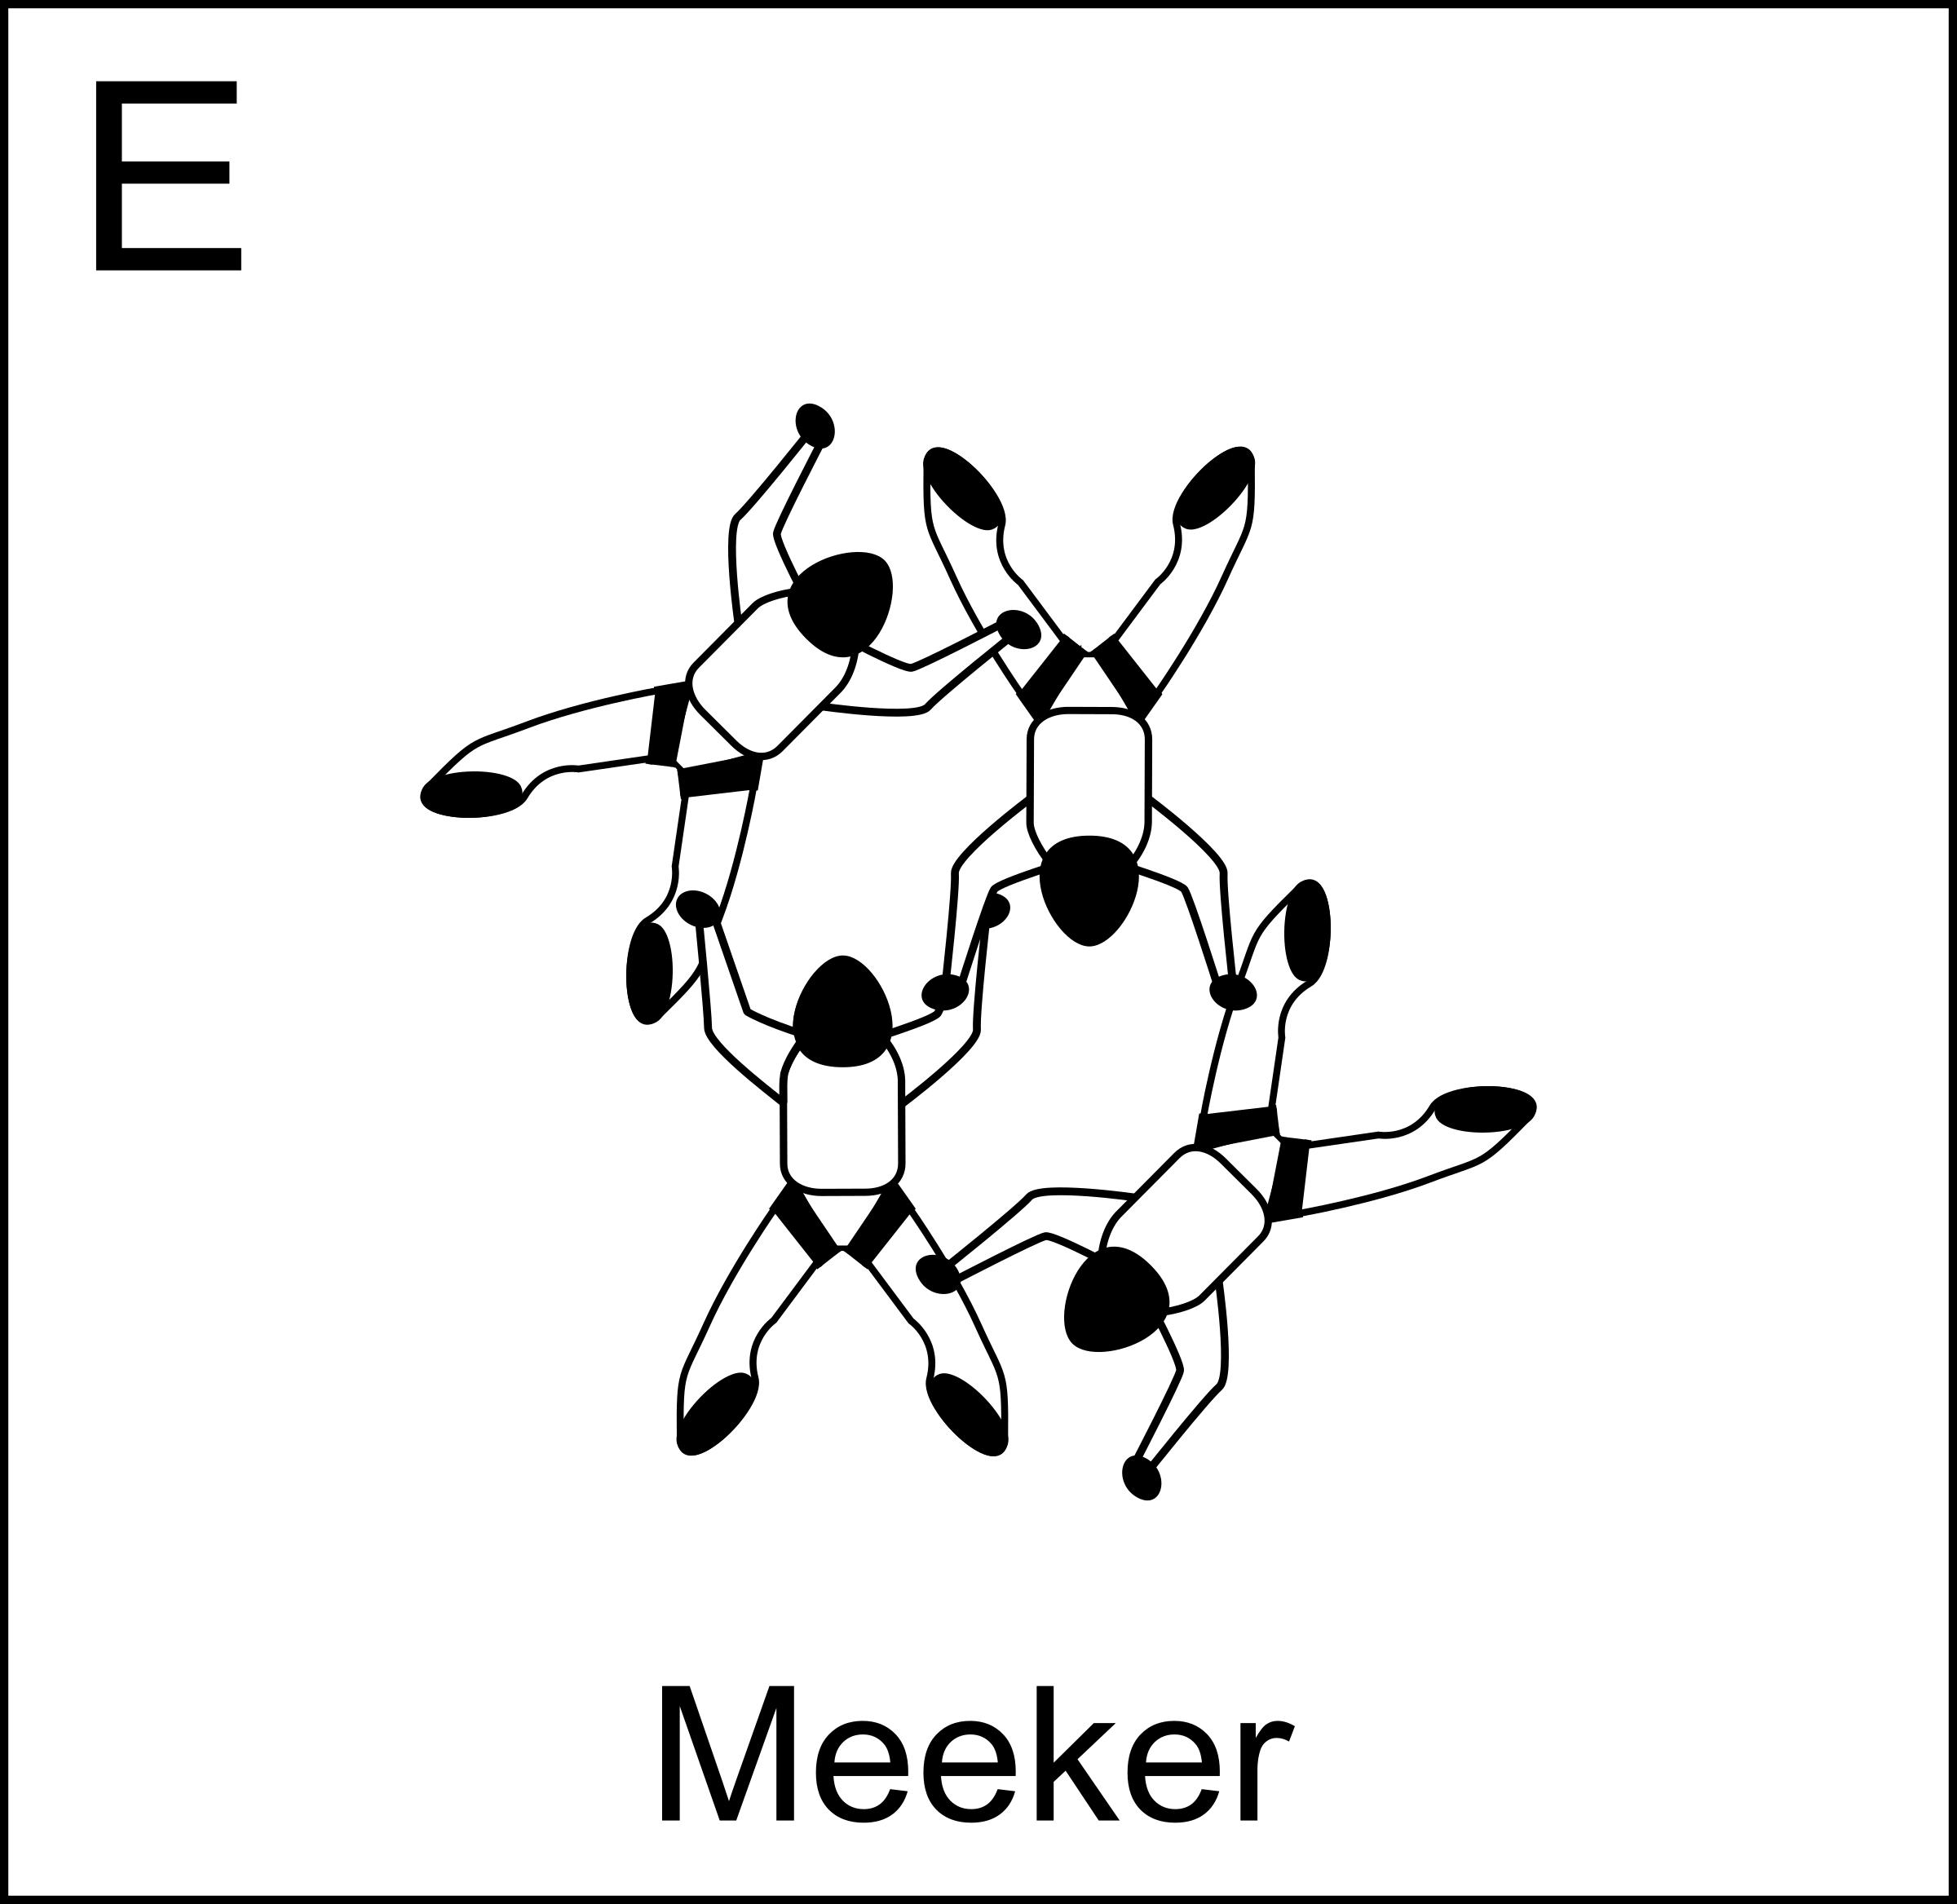 Figure E - Meeker, Vol relatif � 4, Formation Skydiving 4-Way png